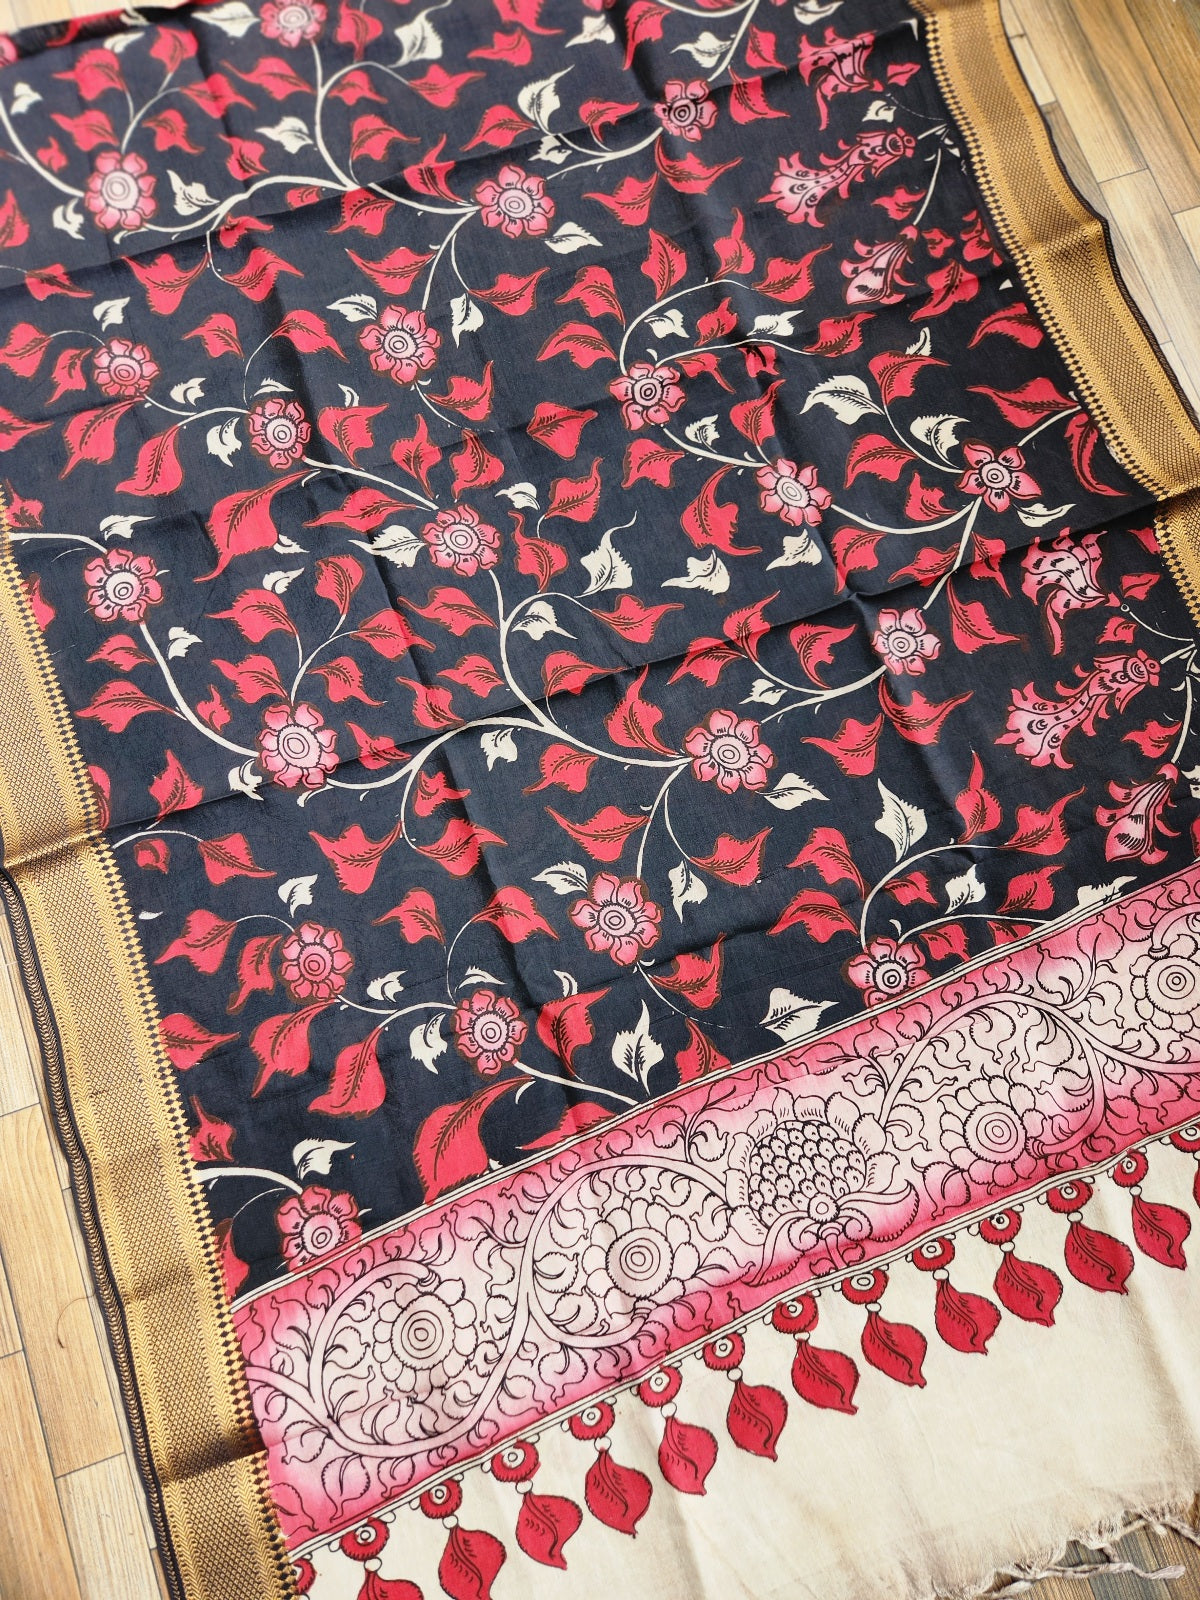 pen kalamkari silk dupatta Black and Red dupatta Indian gifts